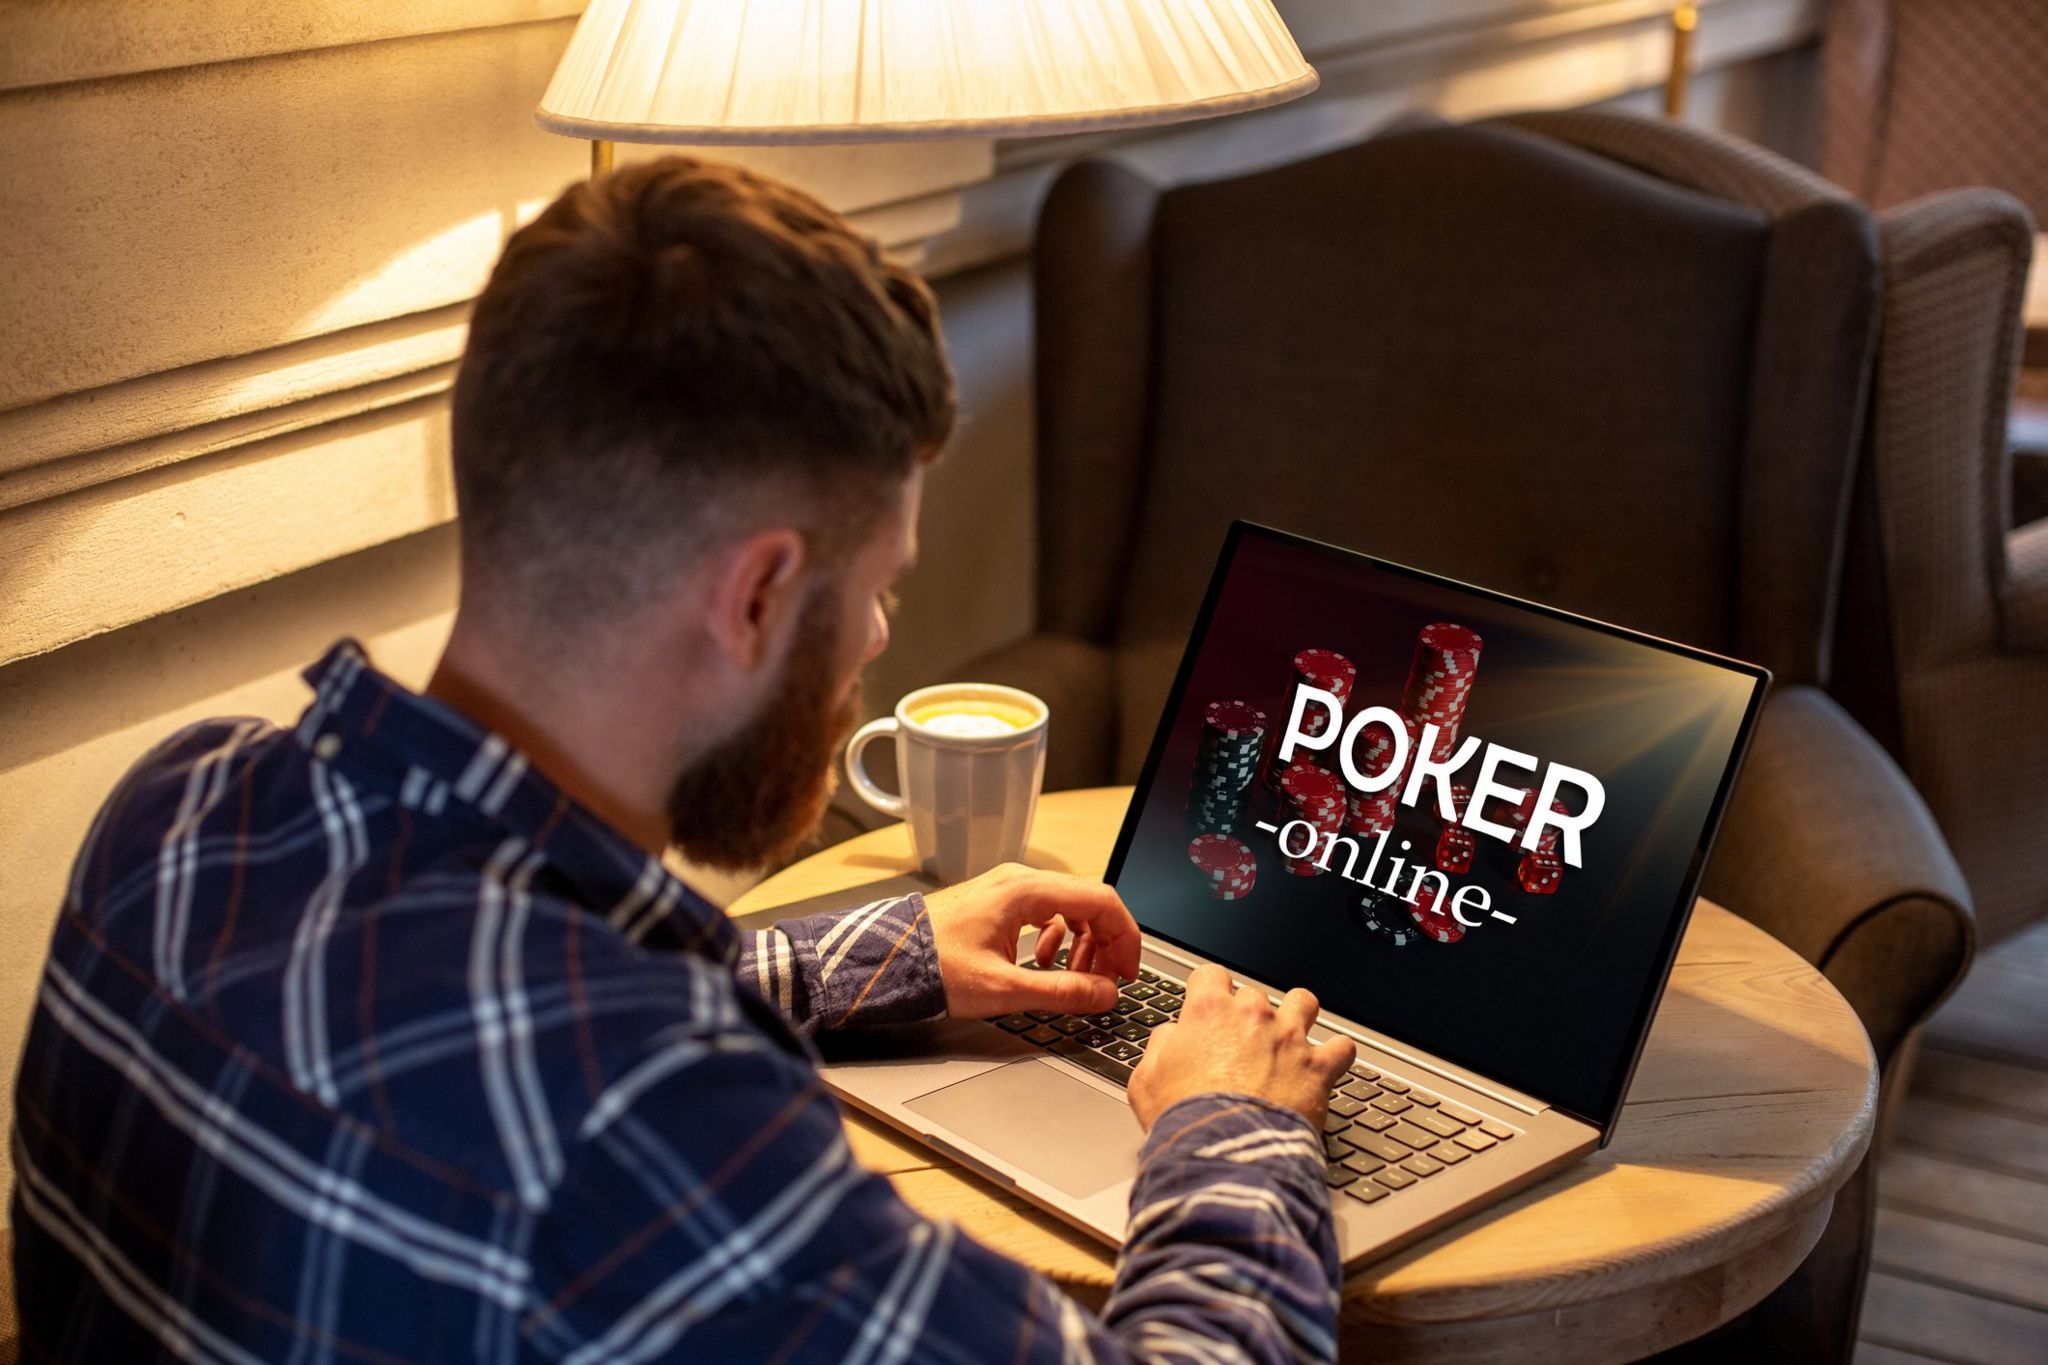 Online poker image